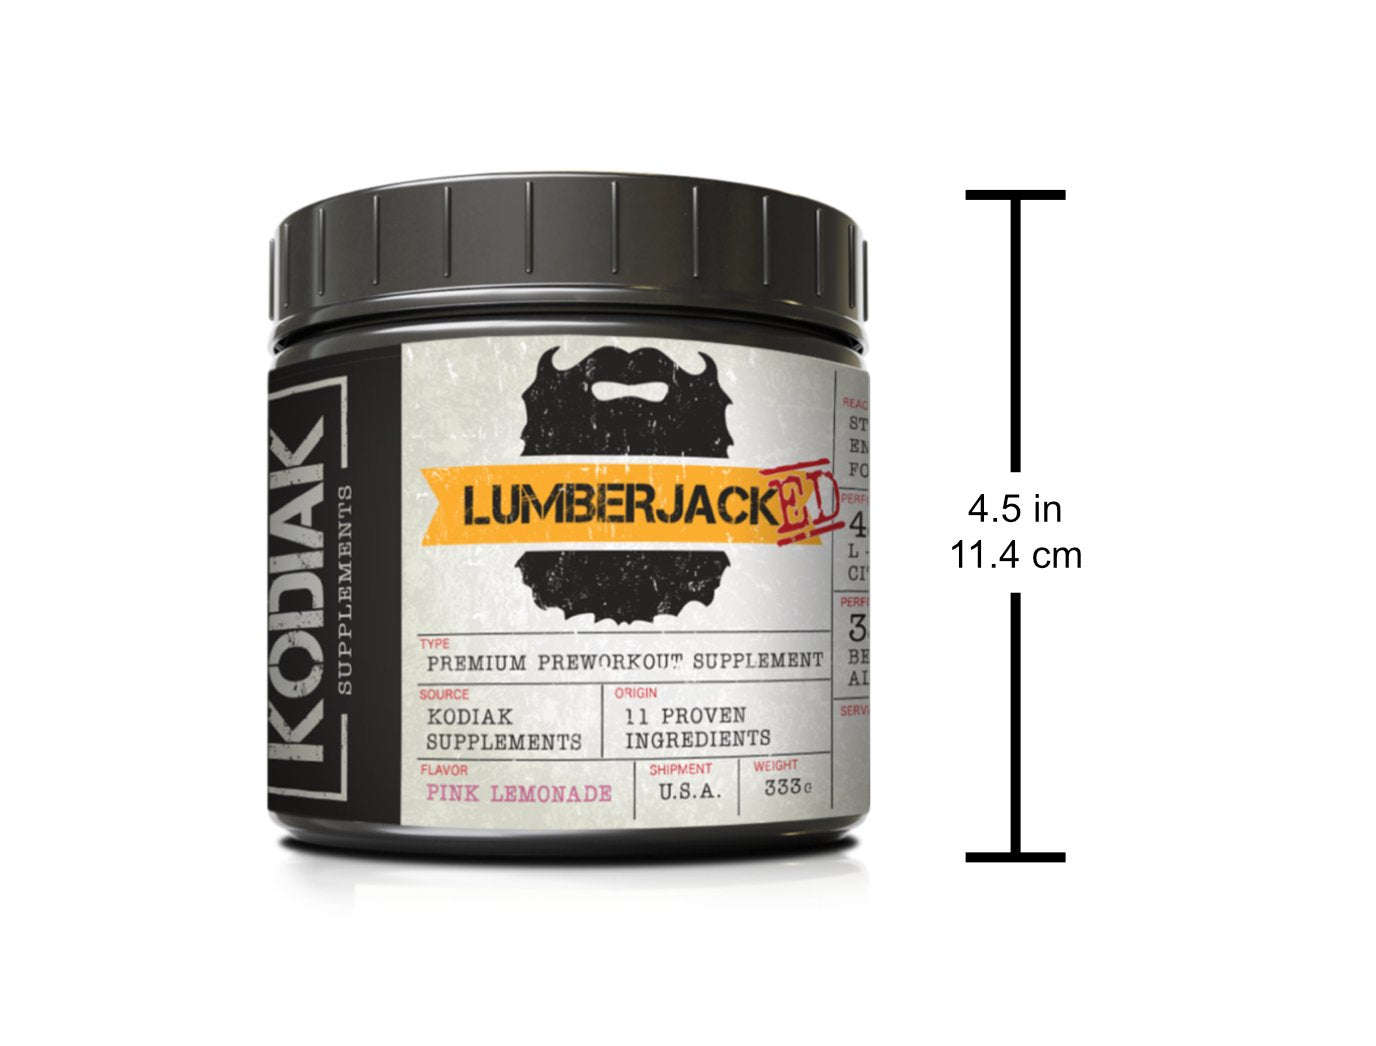 LUMBERJACKED Pre-Workout Supplement - 30 Servings - Better Pumps, Strength, Energy, and Focus - No Crash - Pink Lemonade